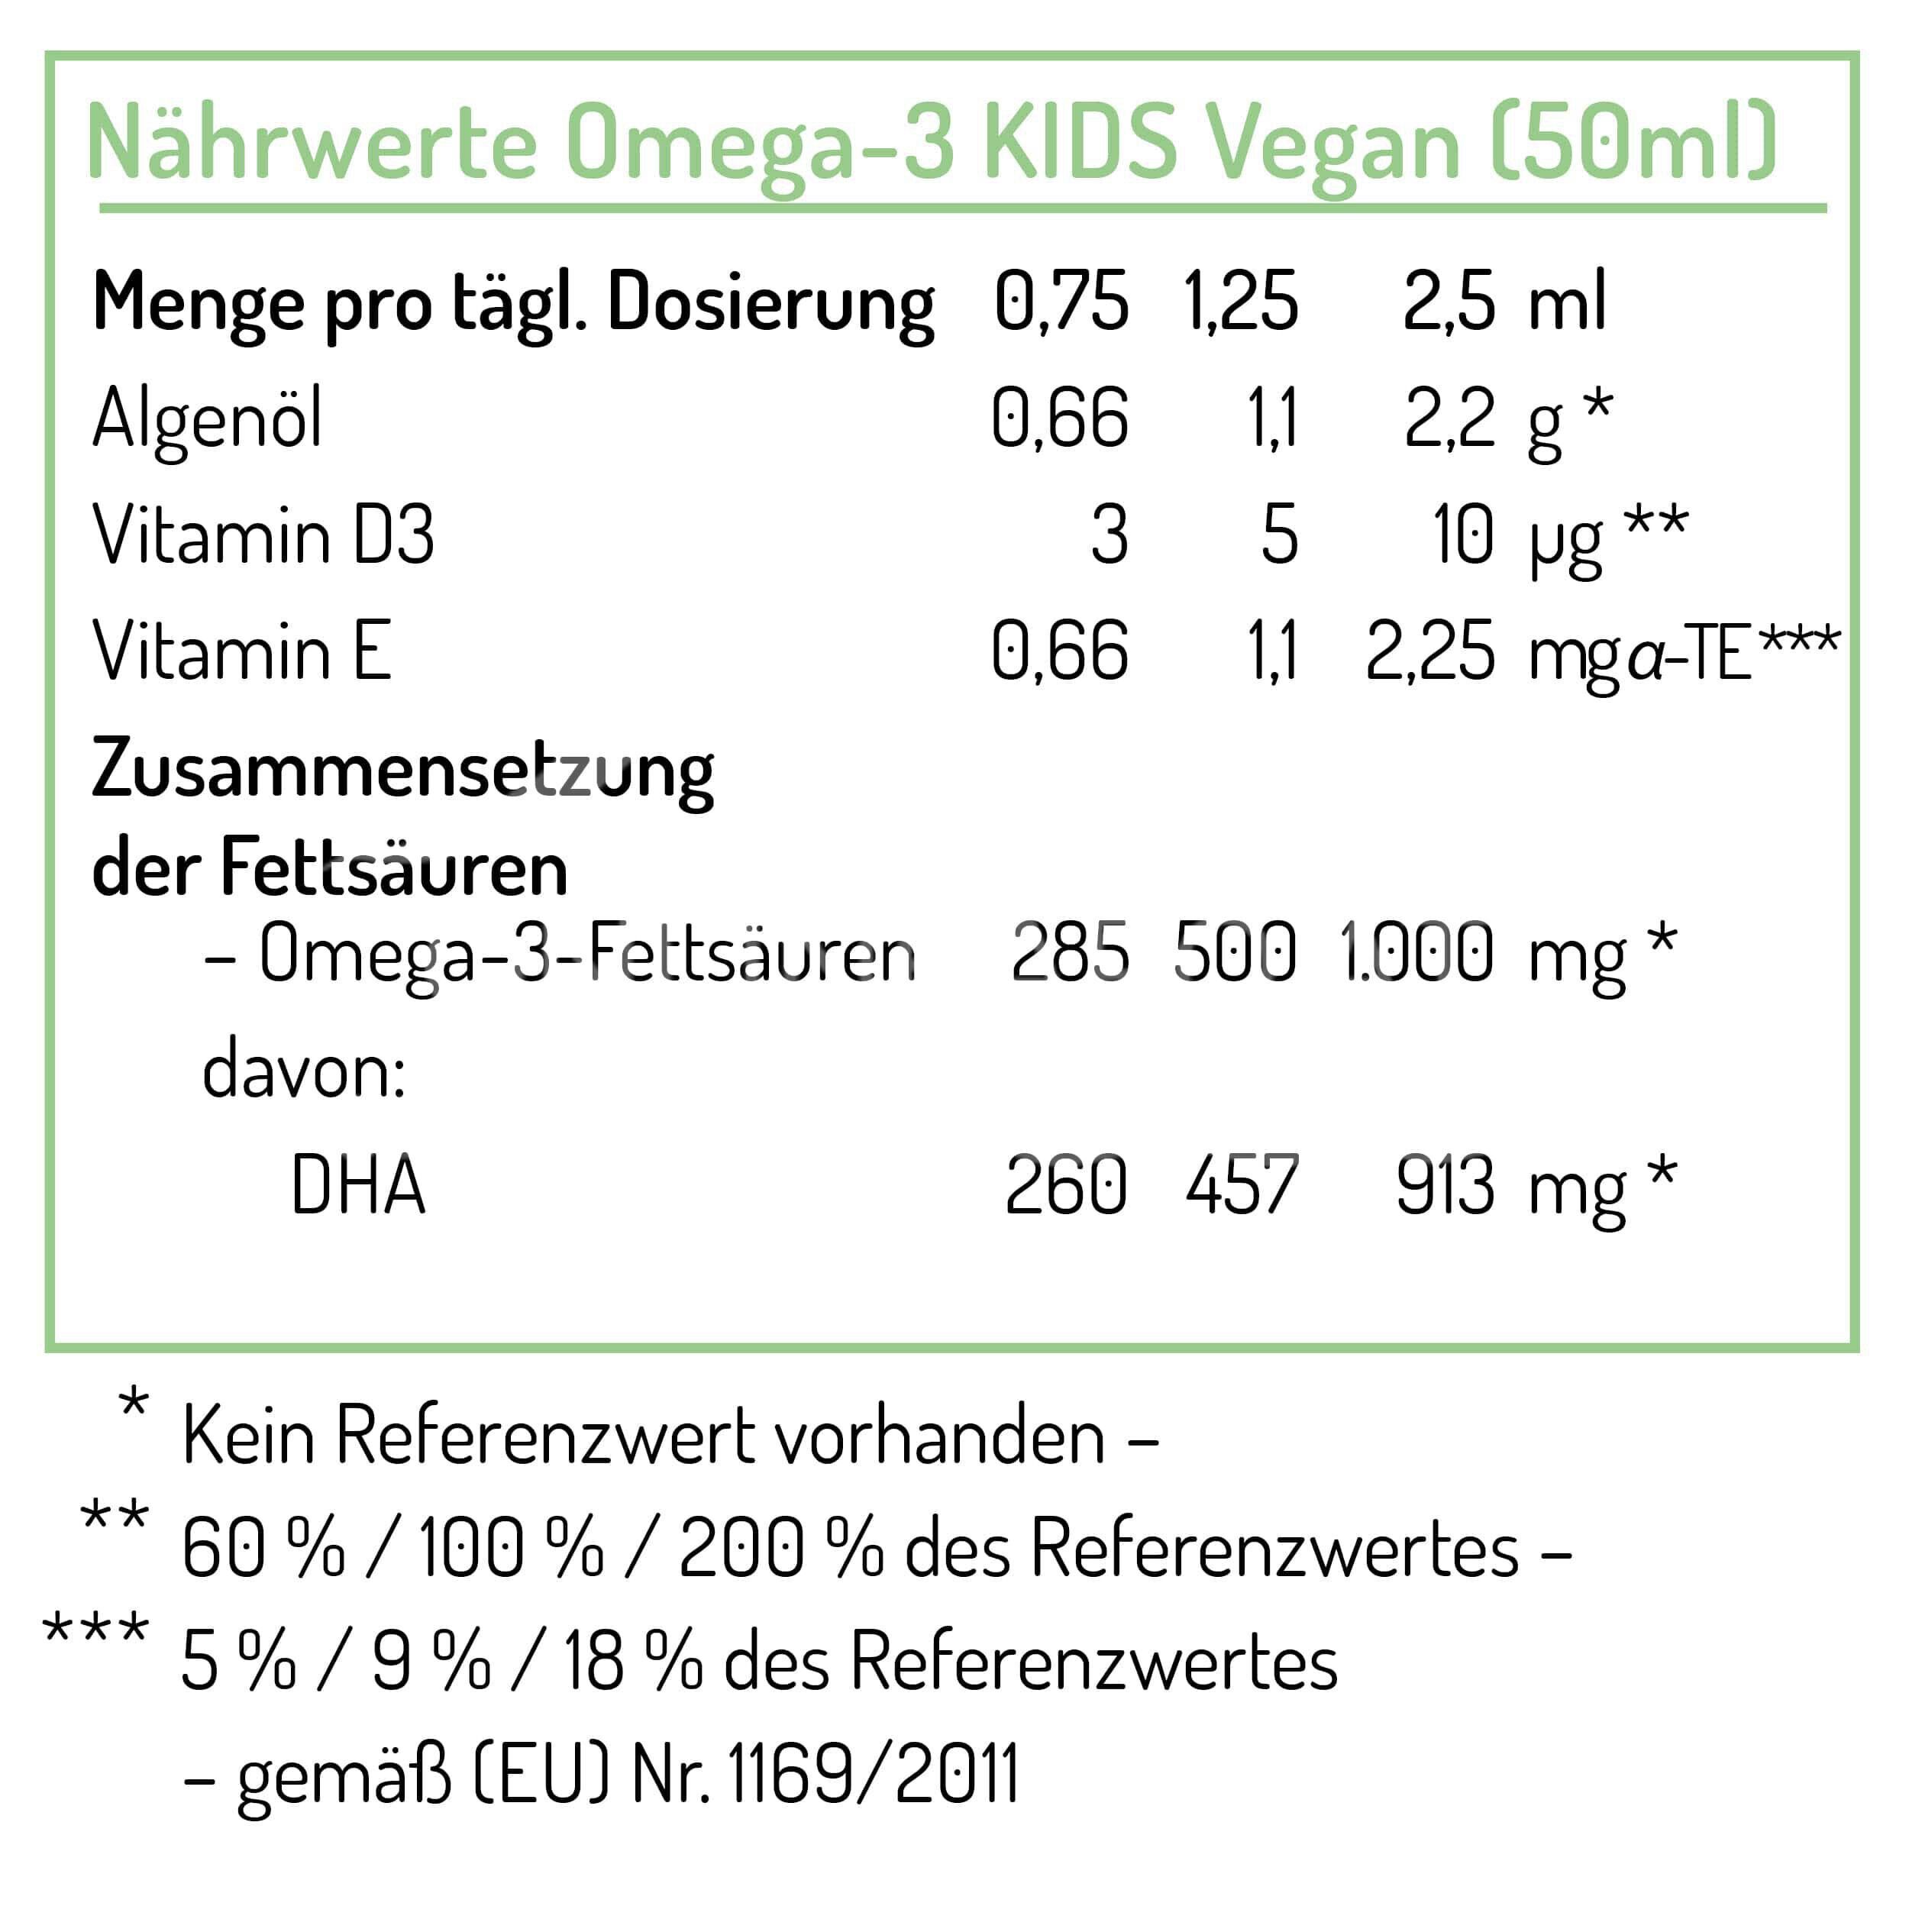 Norsan Omega-3 KIDS Vegan Tropfen